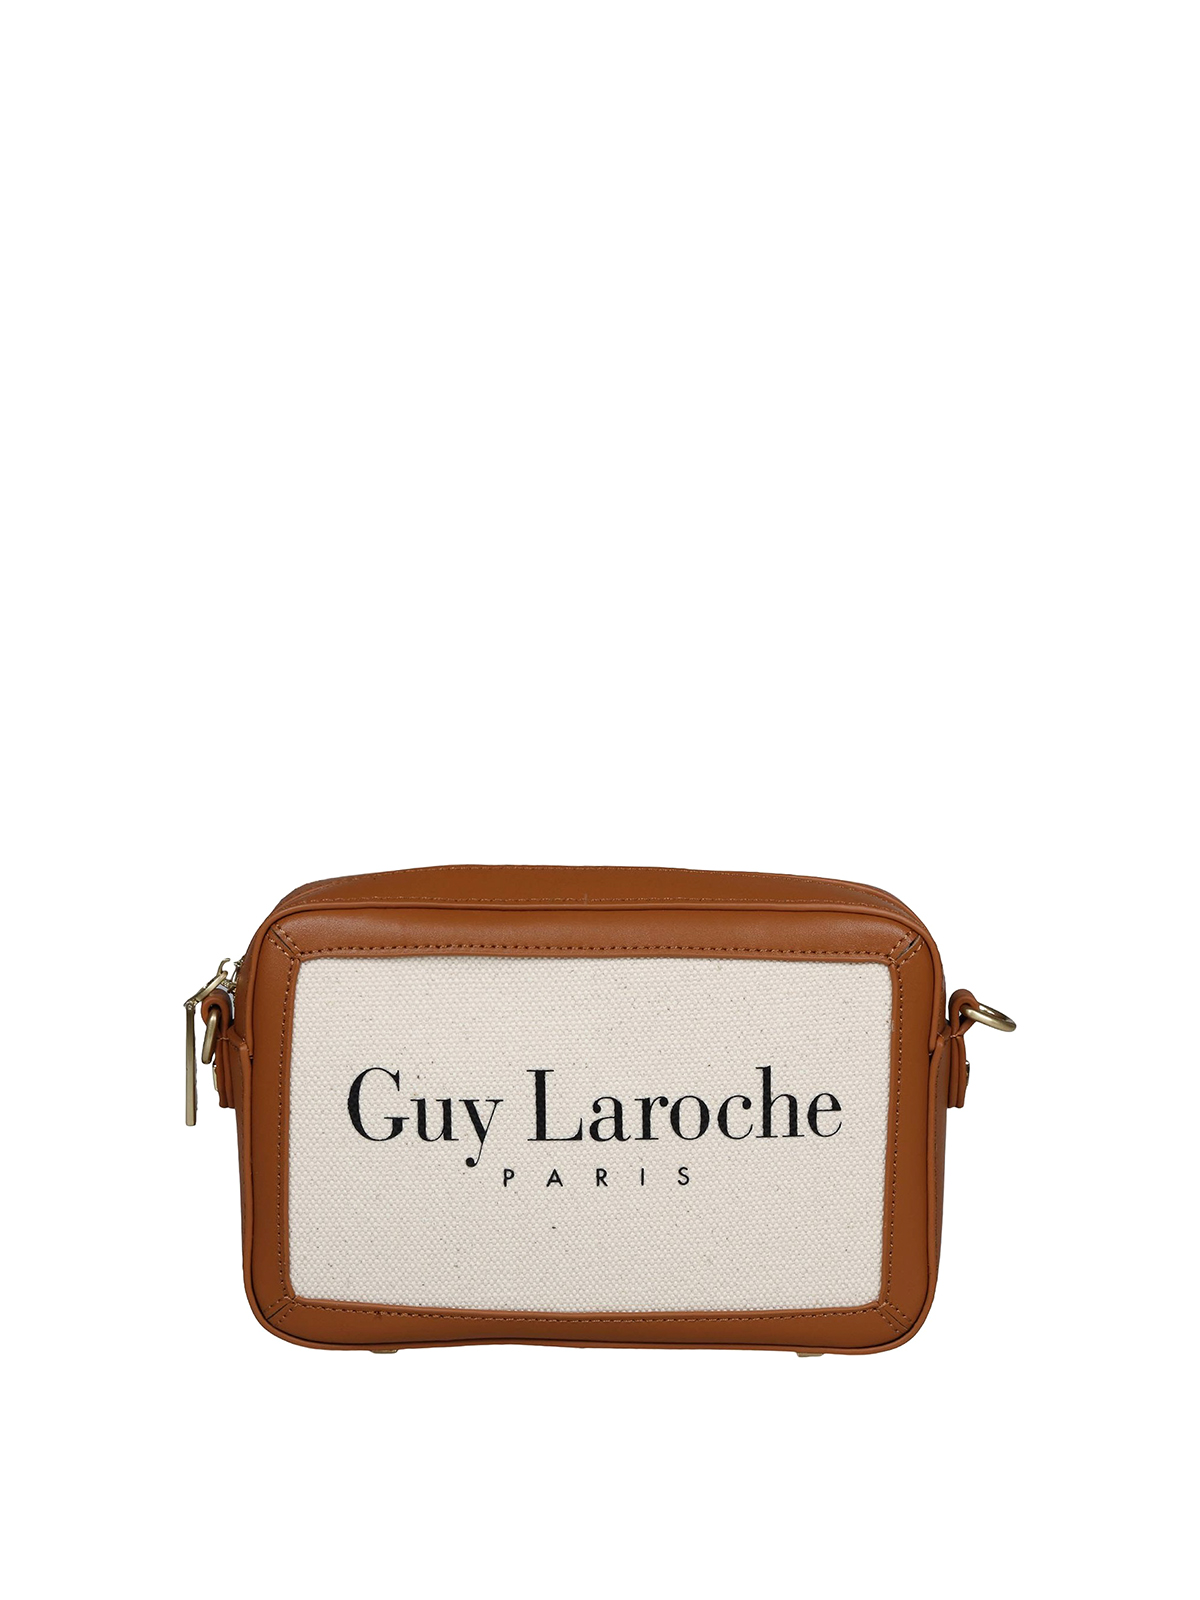 Guy Laroche Croc Print Brown Shoulder Bag, Hand Bag, Paris